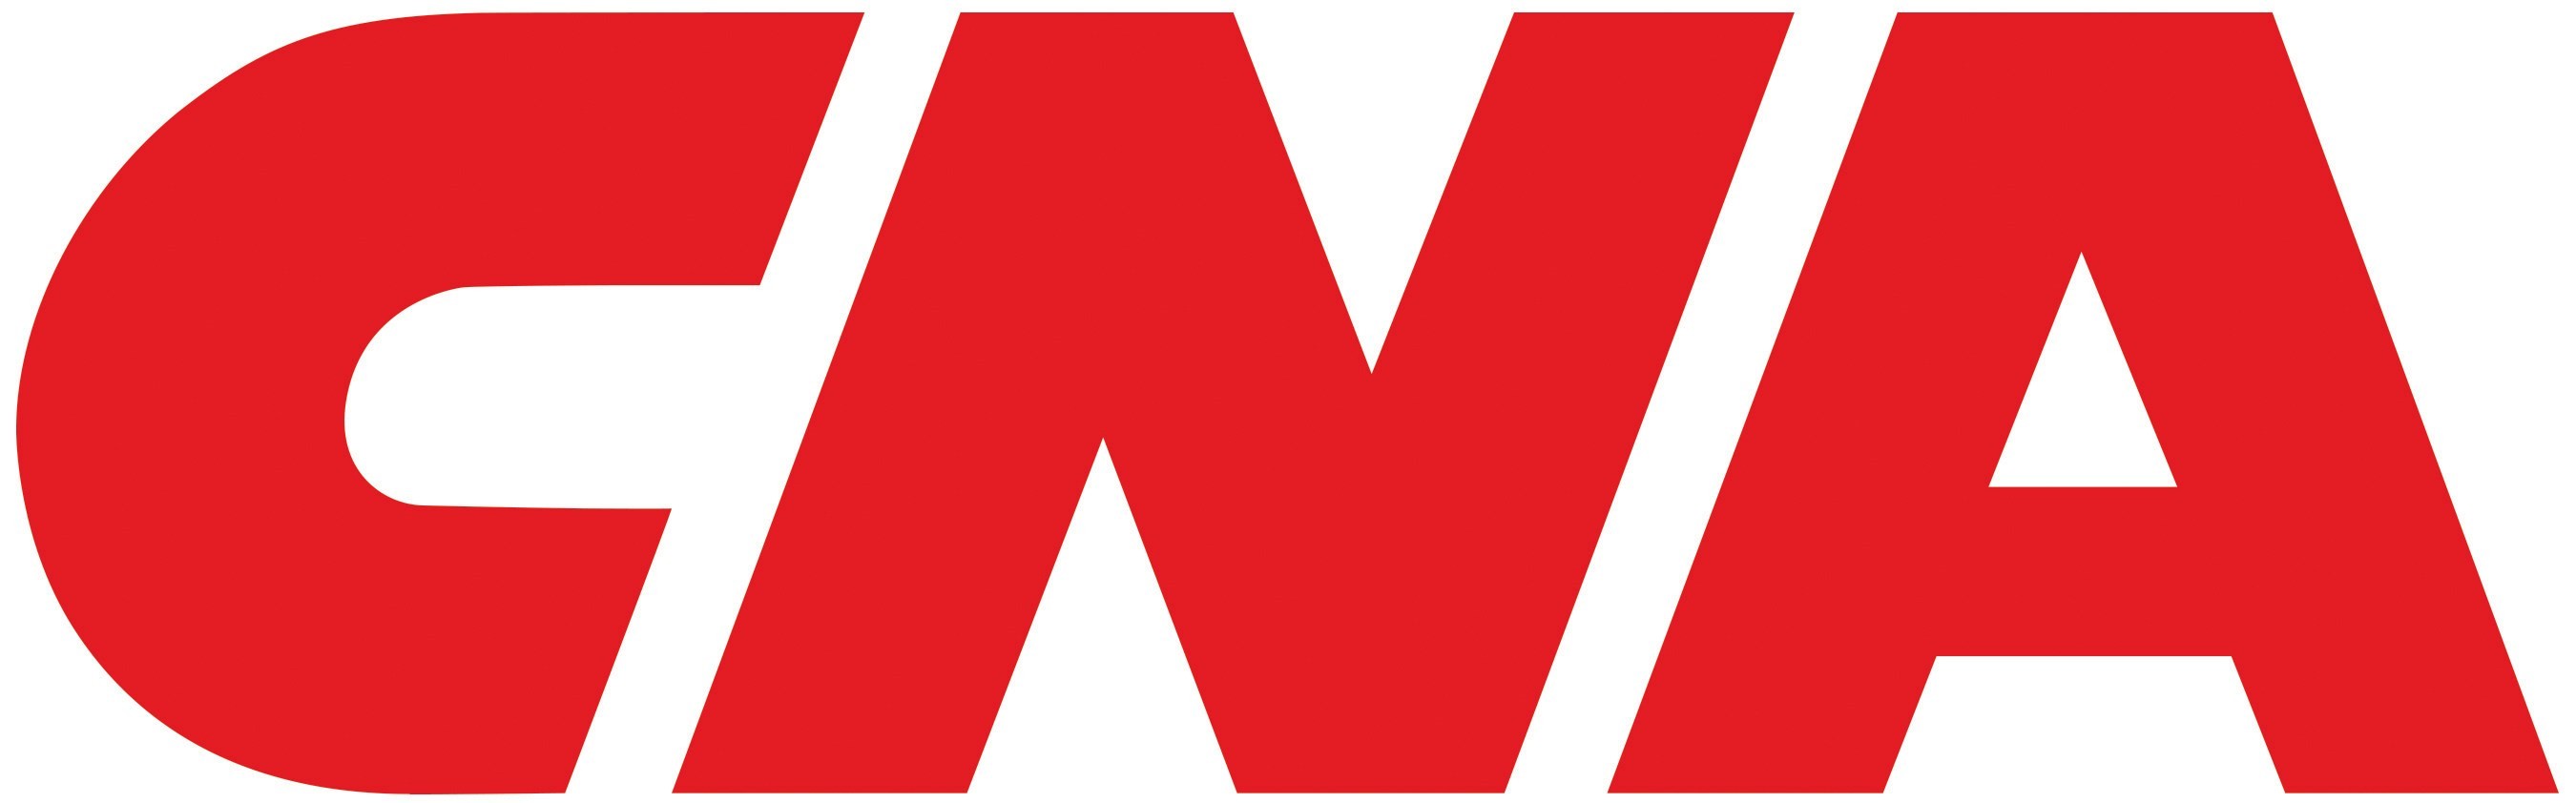 CNA logo. (PRNewsFoto/CNA Financial Corporation) (PRNewsfoto/CNA)